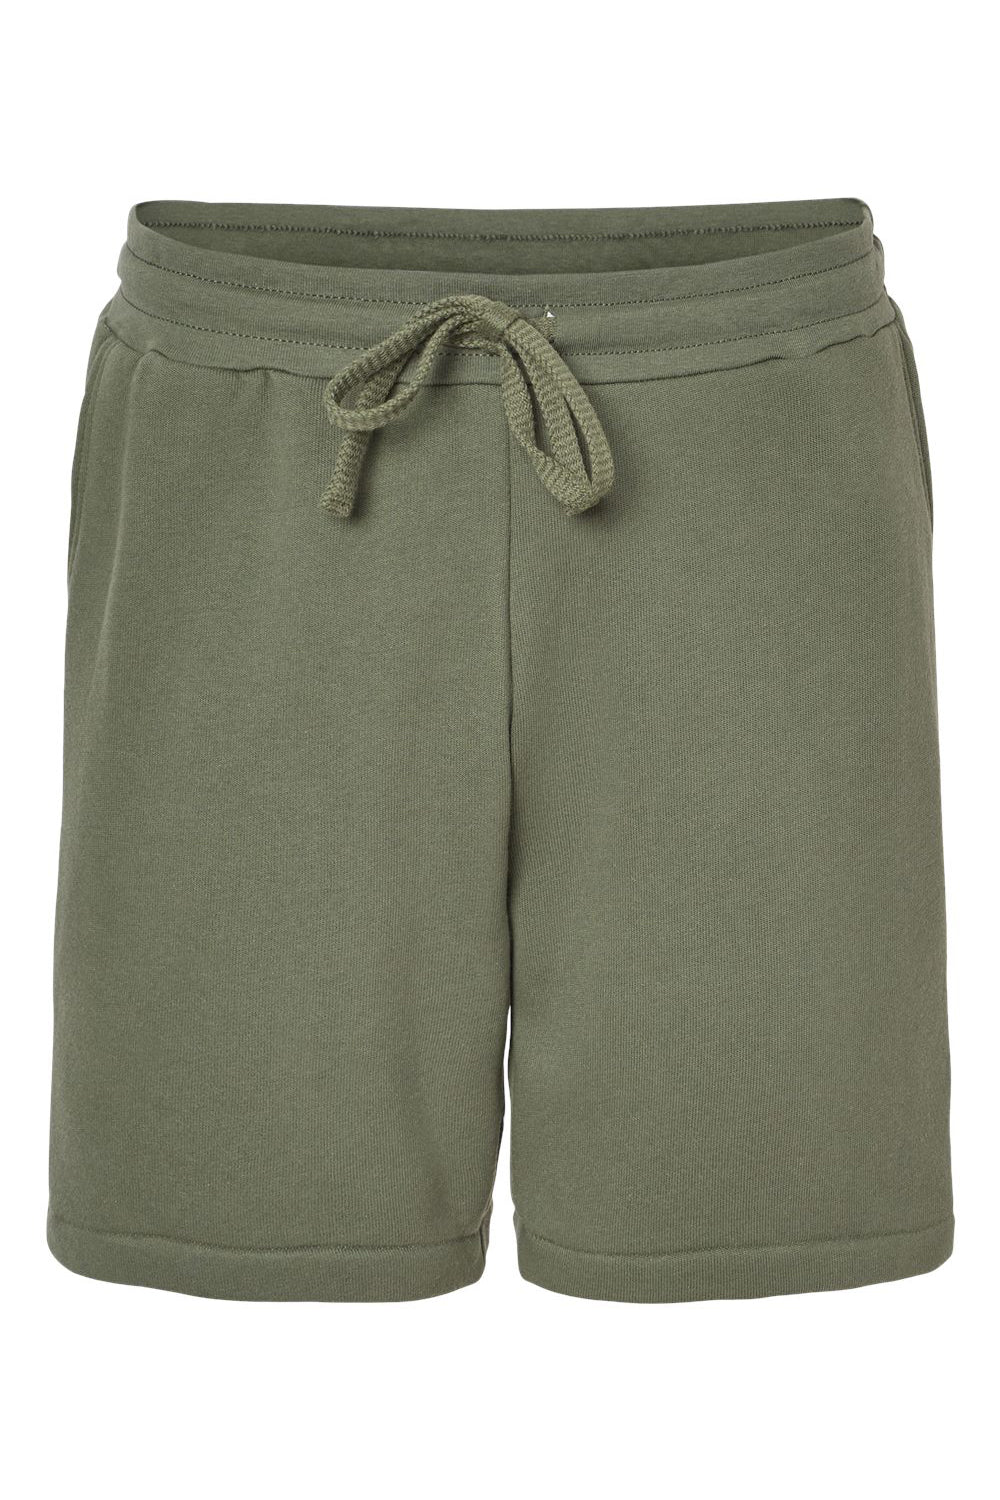 Bella + Canvas 3724 Mens Shorts w/ Pockets Military Green Flat Front